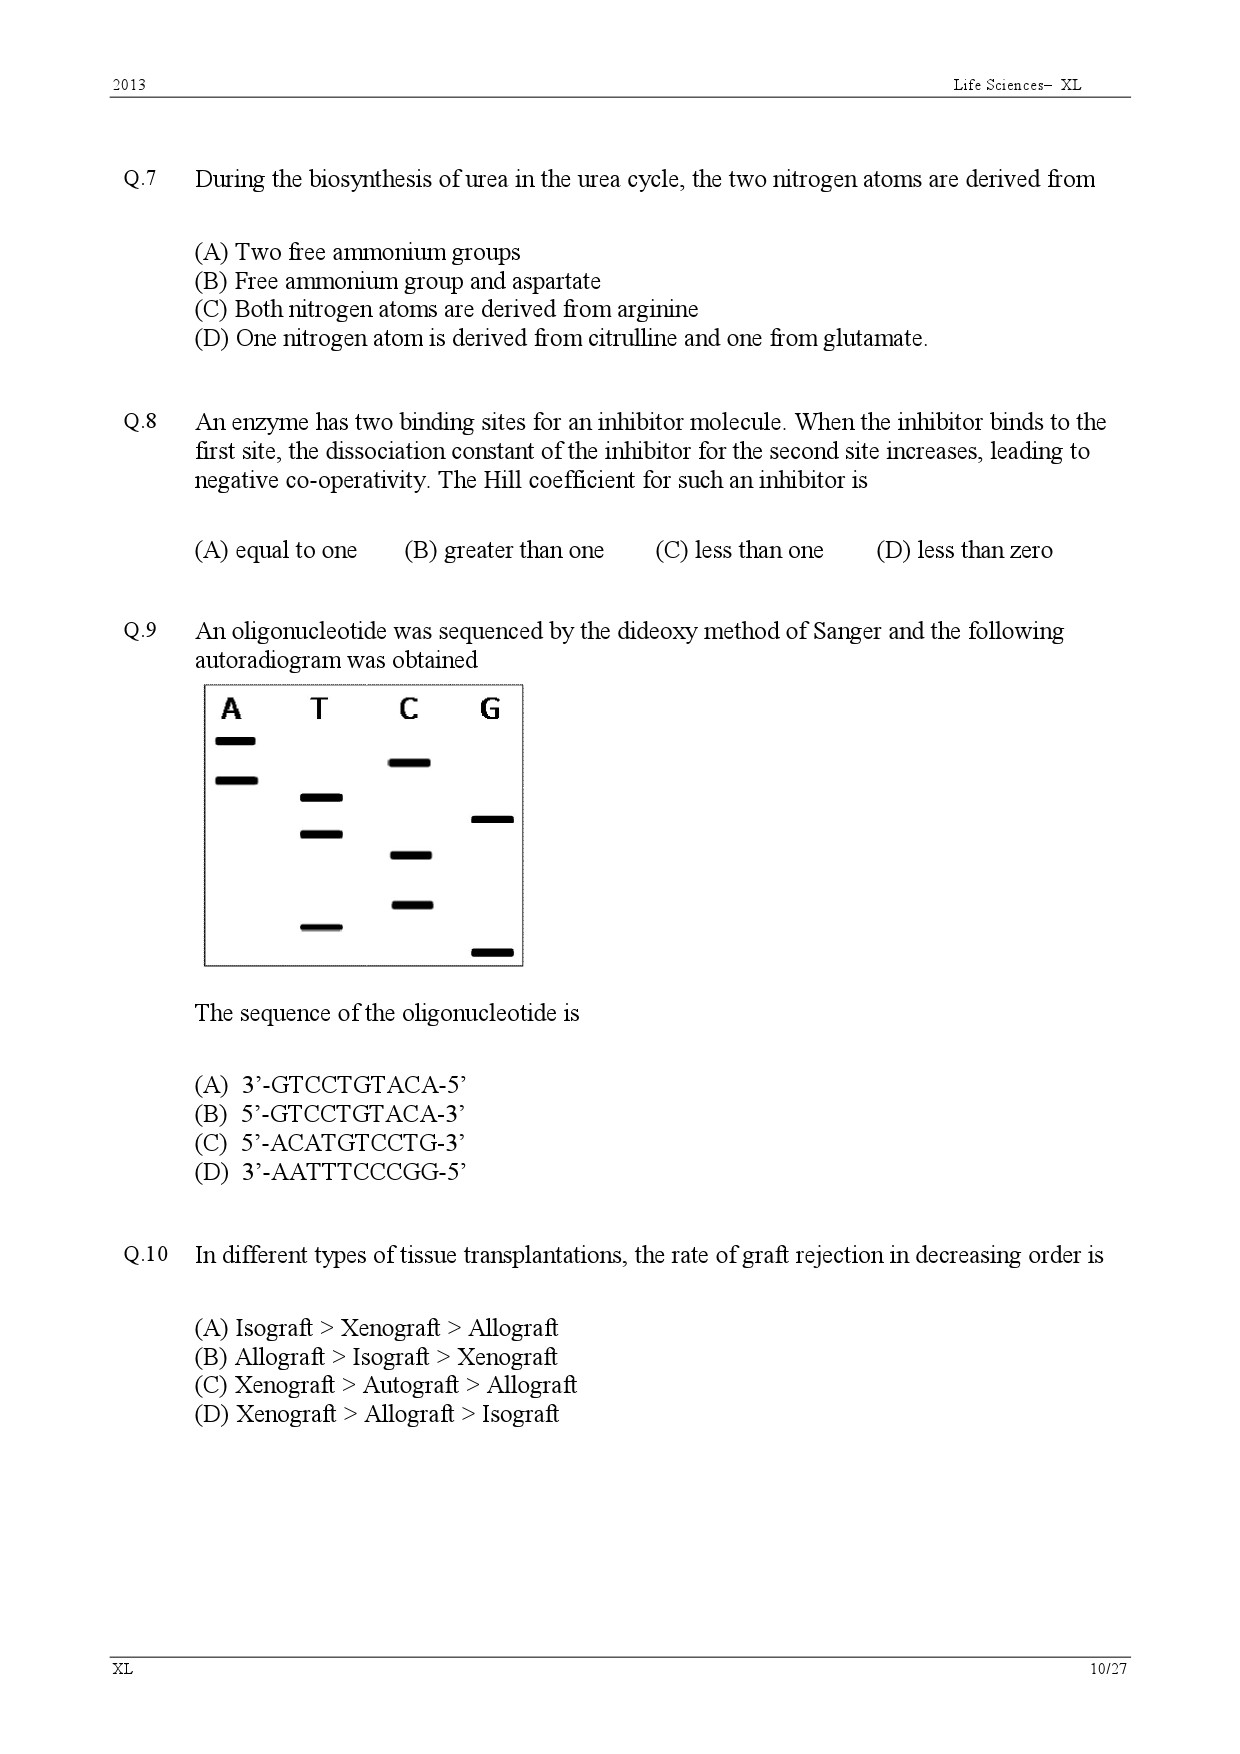 GATE Exam Question Paper 2013 Life Sciences 10